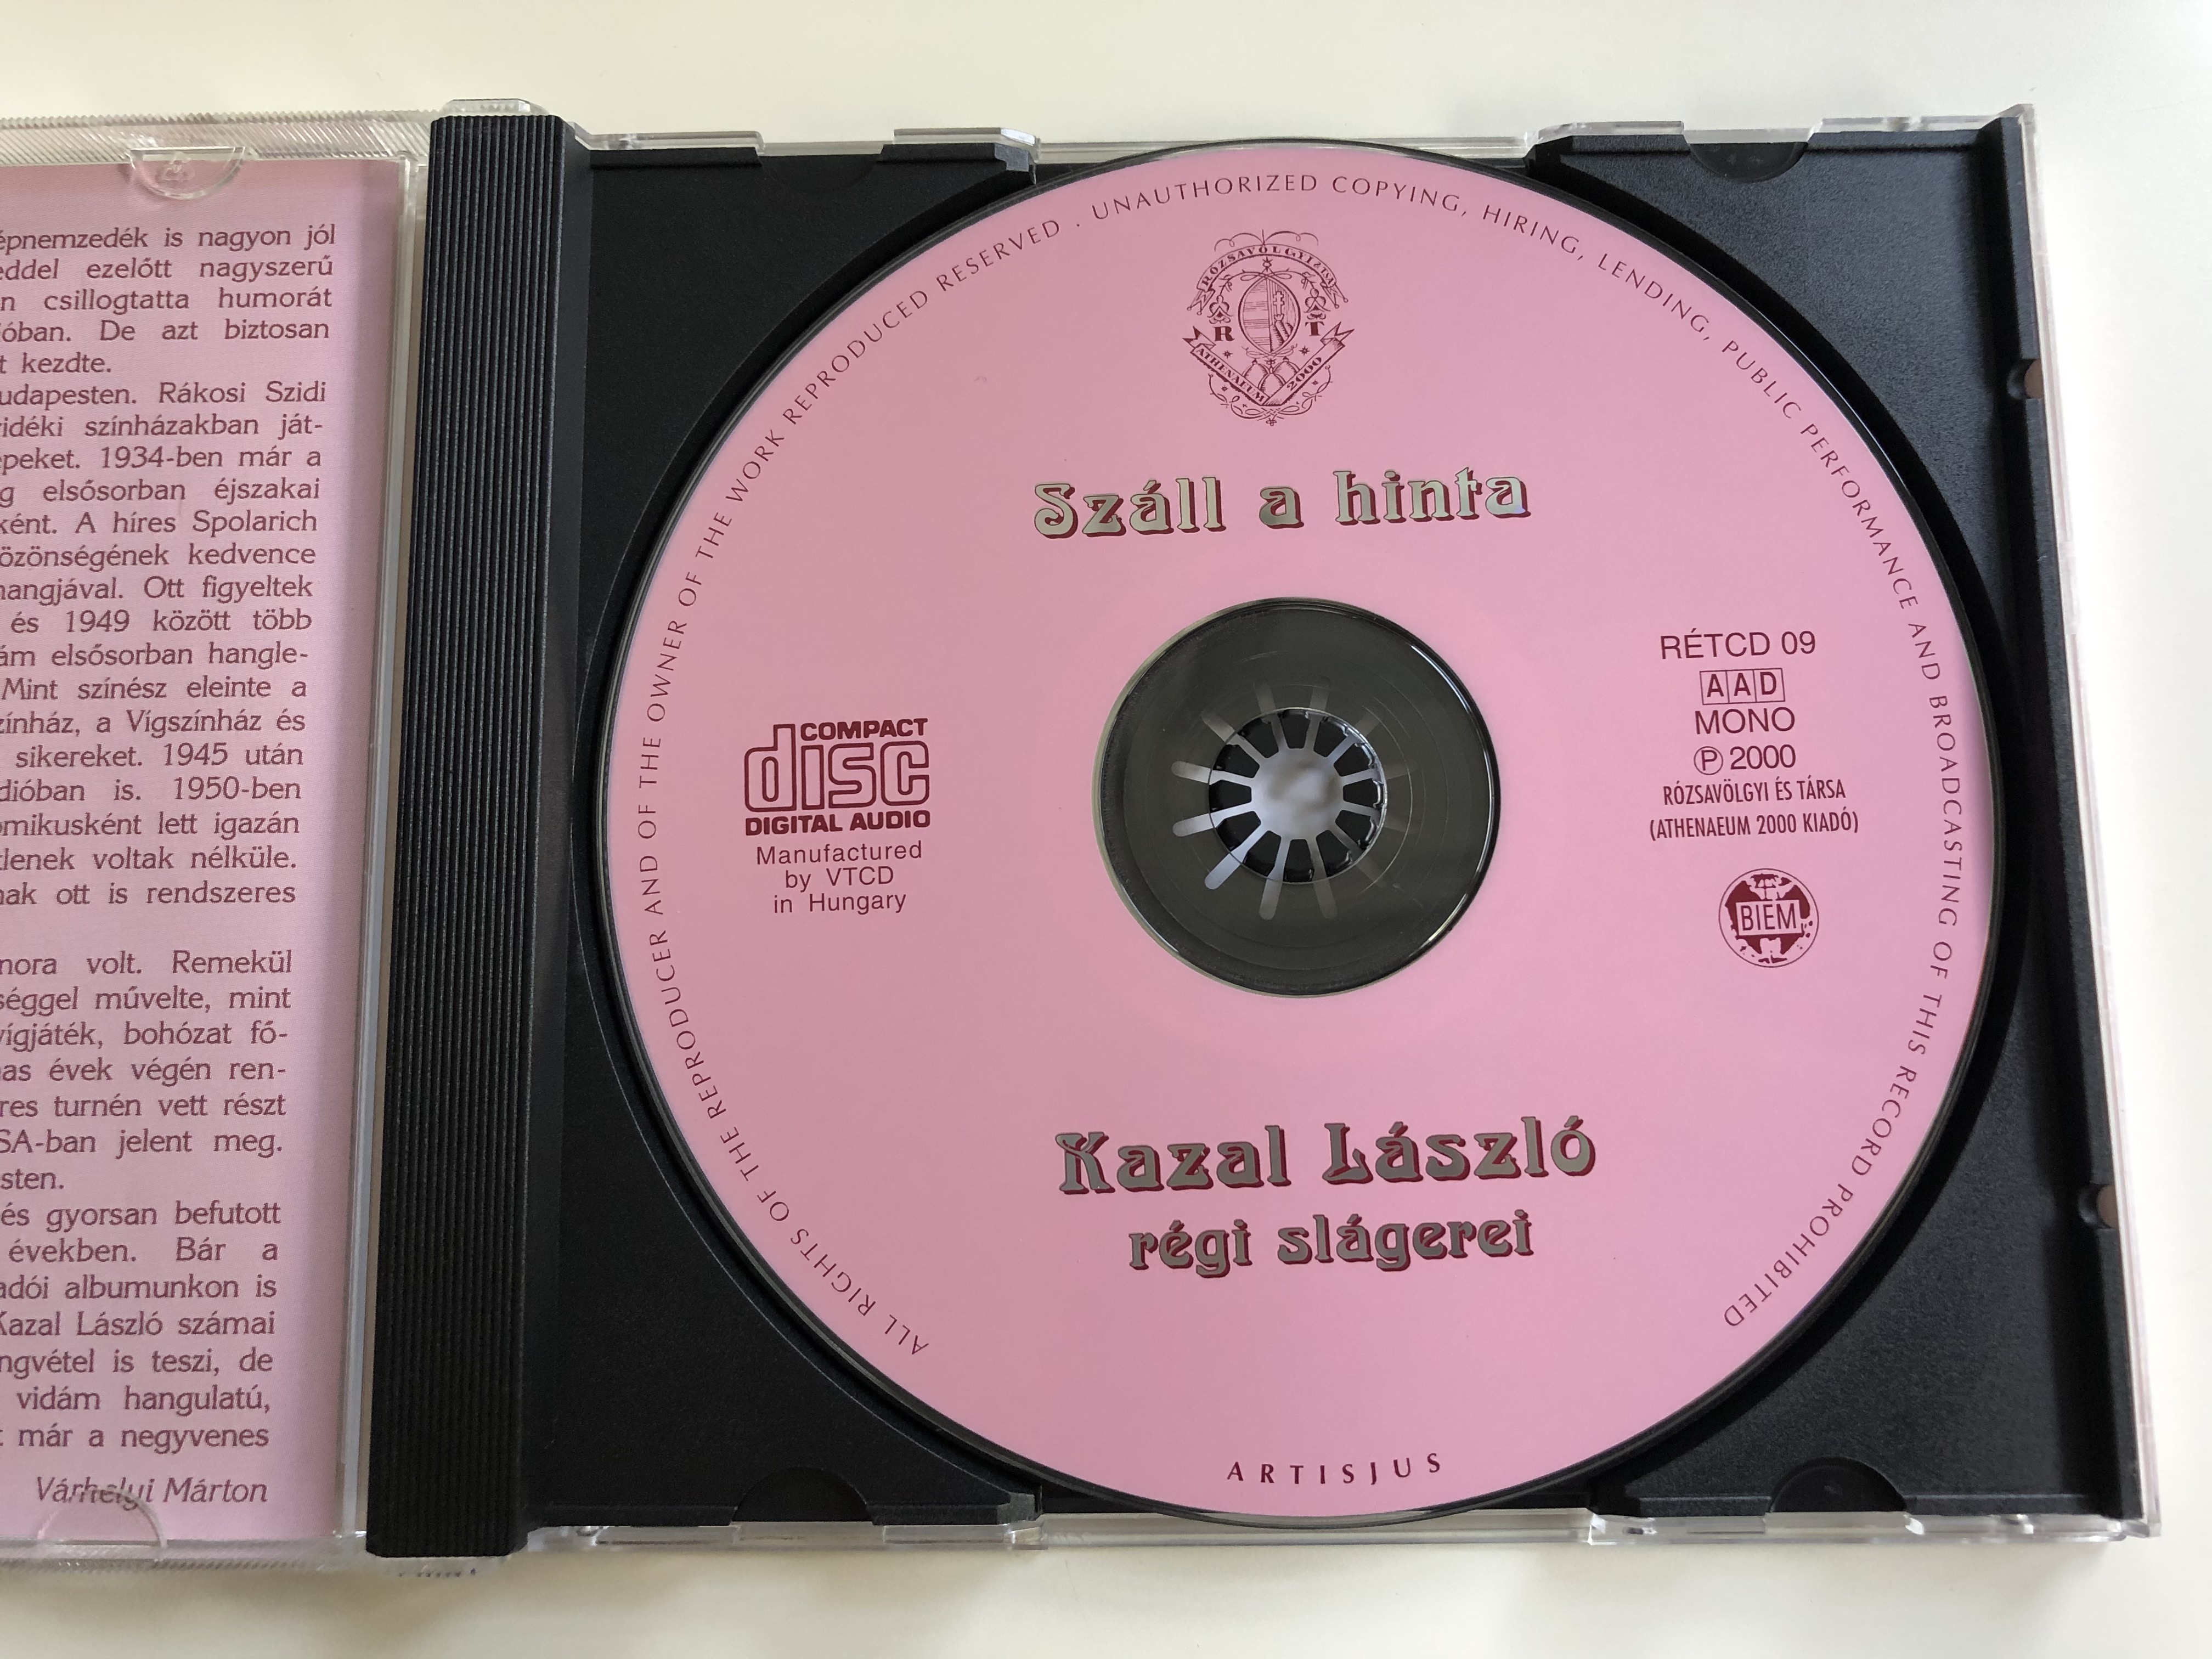 sz-ll-a-hinta-kazal-l-szl-regi-slagerei-r-zsav-lgyi-s-t-rsa-audio-cd-2000-mono-r-tcd-09-4-.jpg